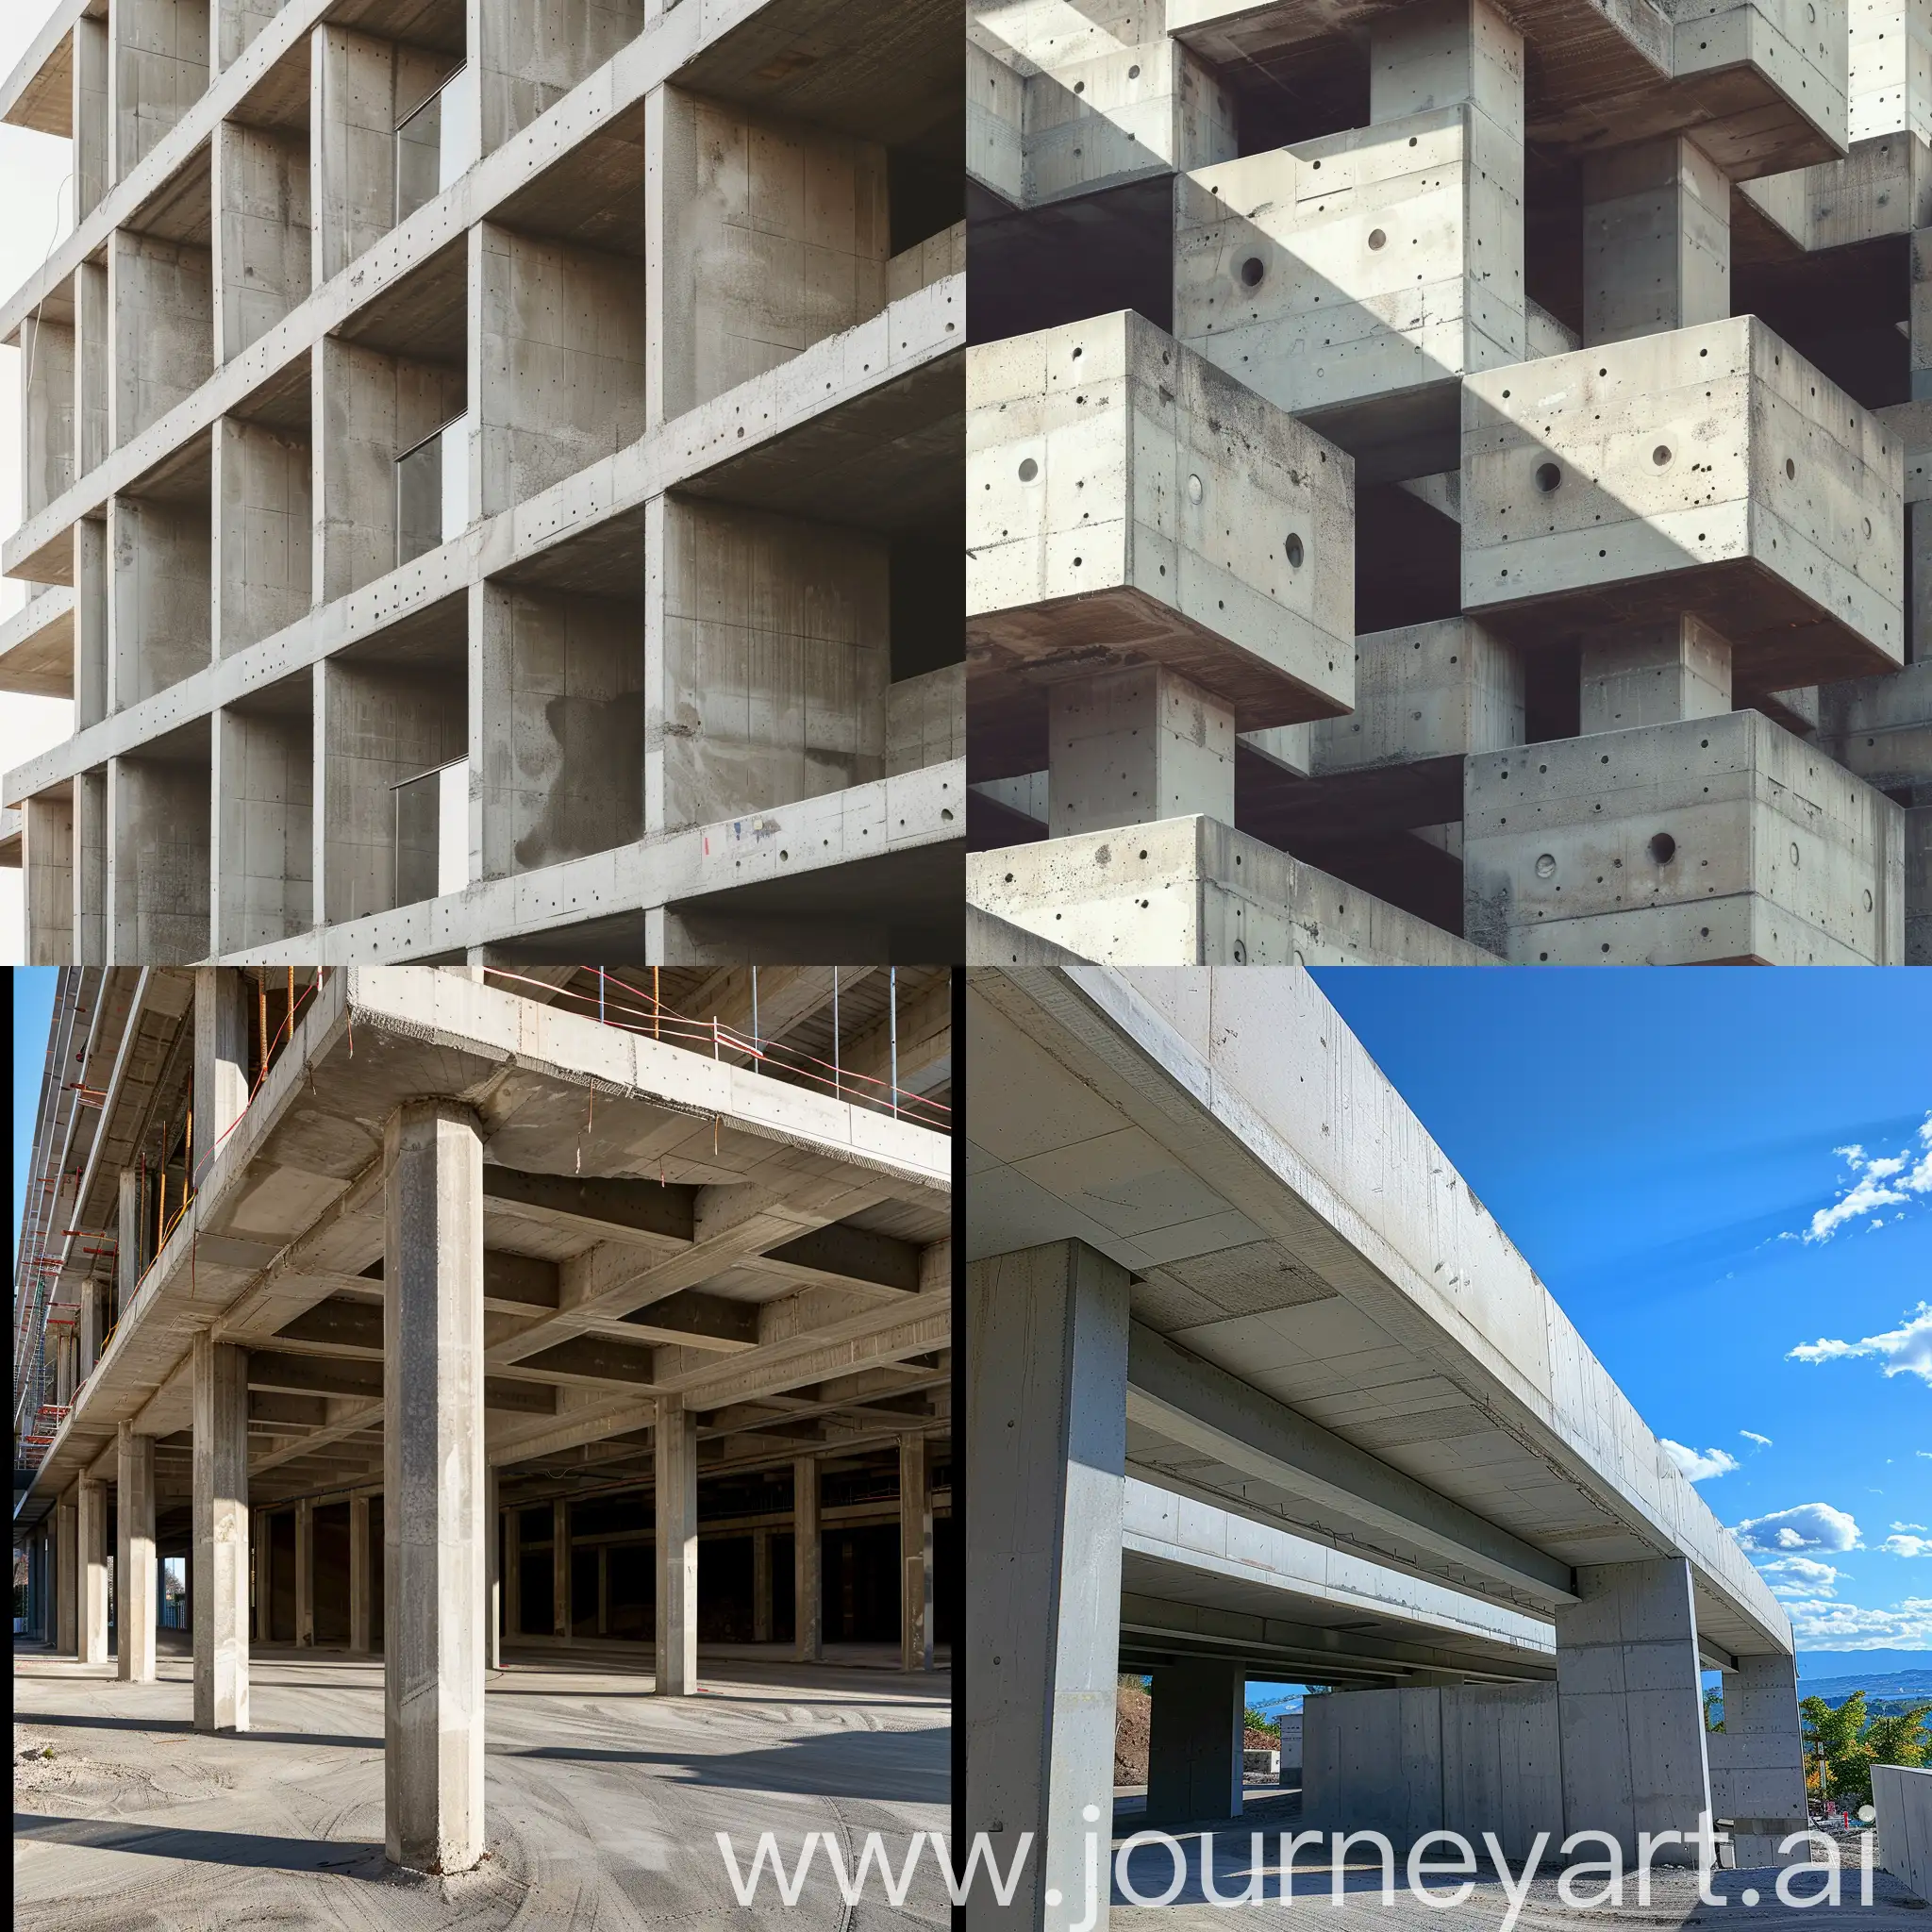 Reinforced-Concrete-Building-Structure-Modern-Architectural-Design